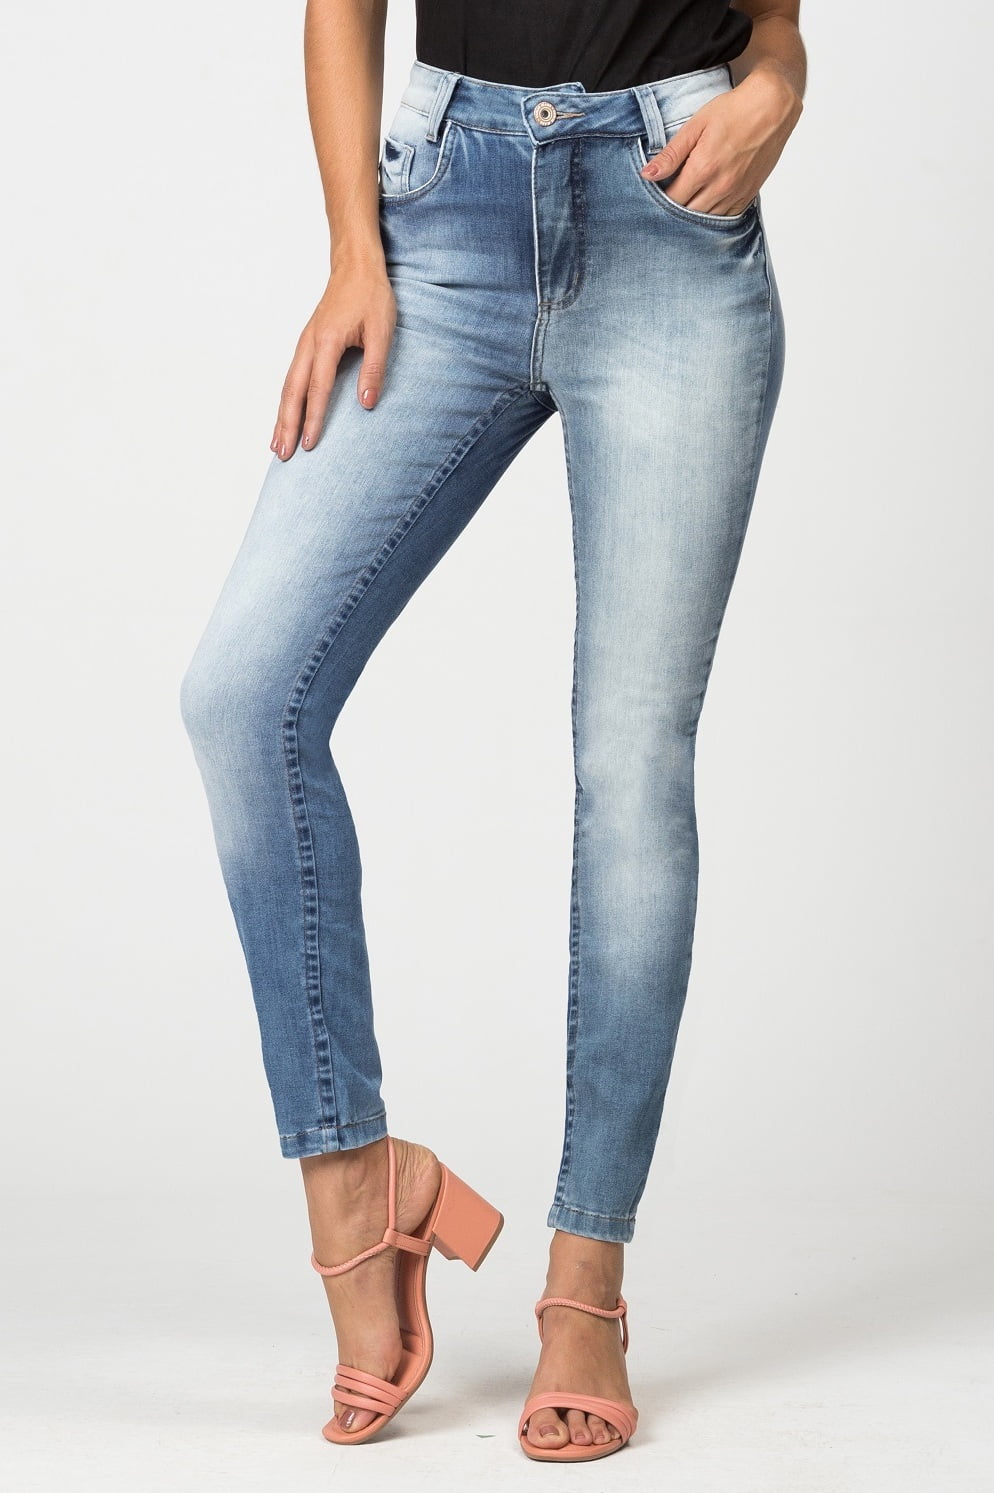 carbon Nationwide Evil Calça Feminina Jeans Claro - Oxiblue Jeans